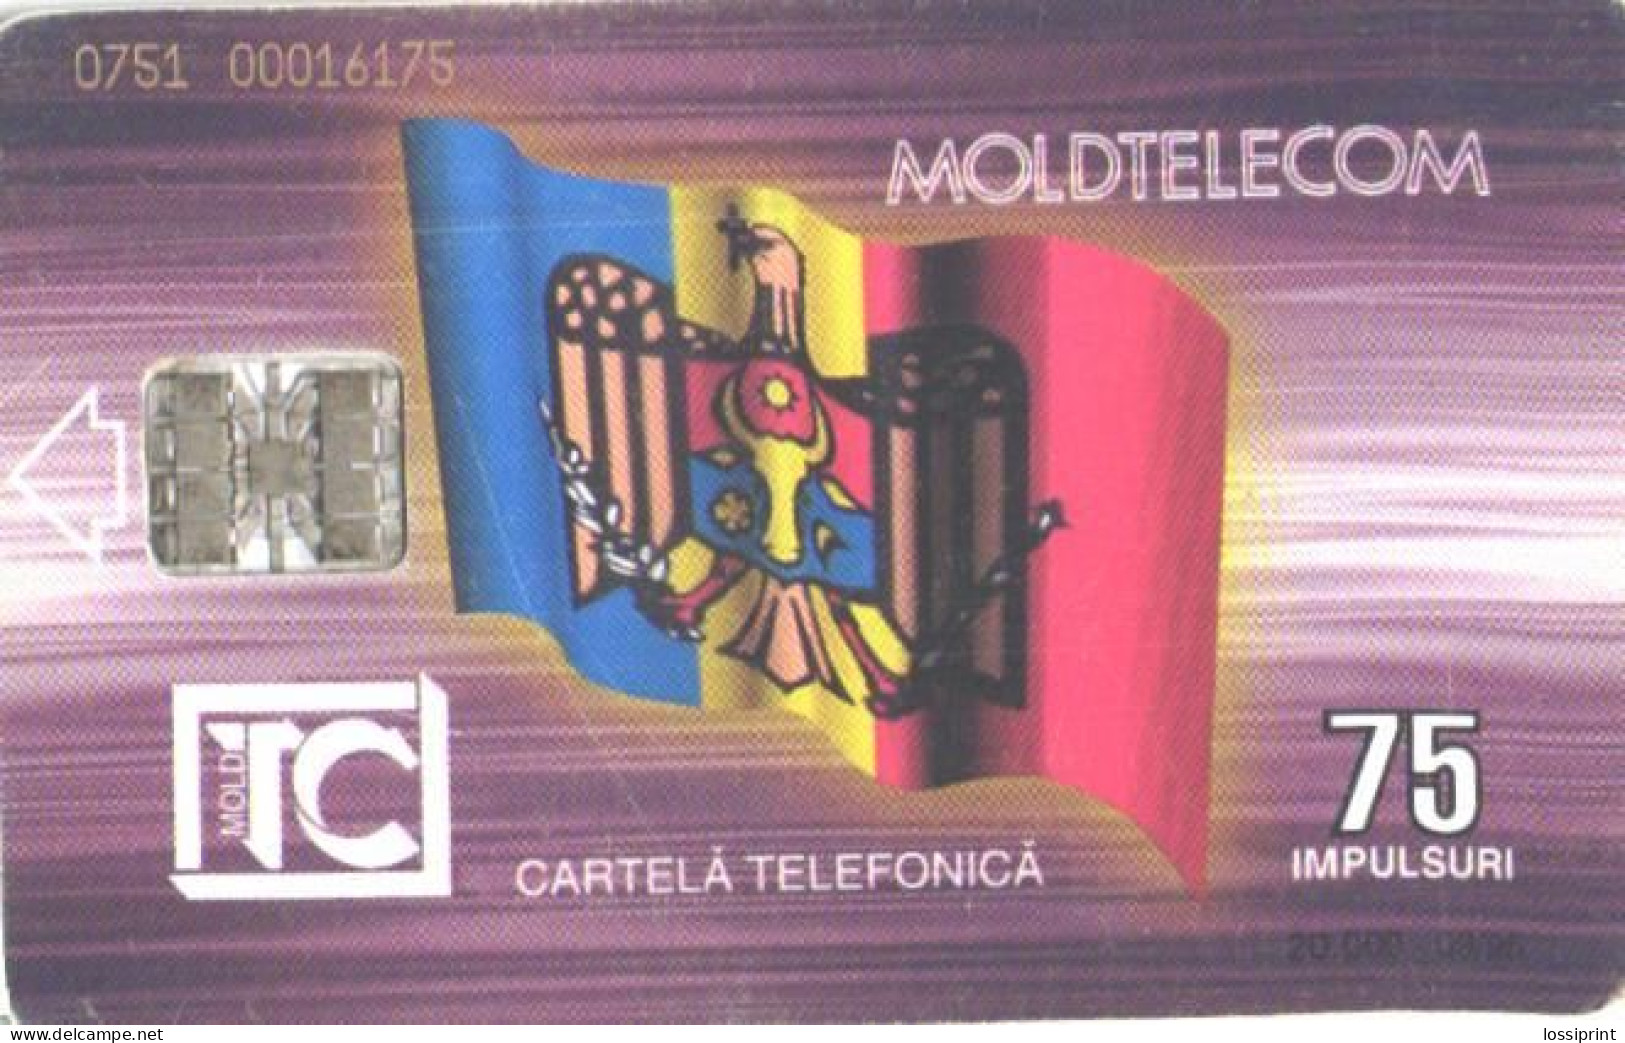 Moldova:Used Phonecard, Moldtelecom, 75 Impulses, Building, 1995 - Moldova